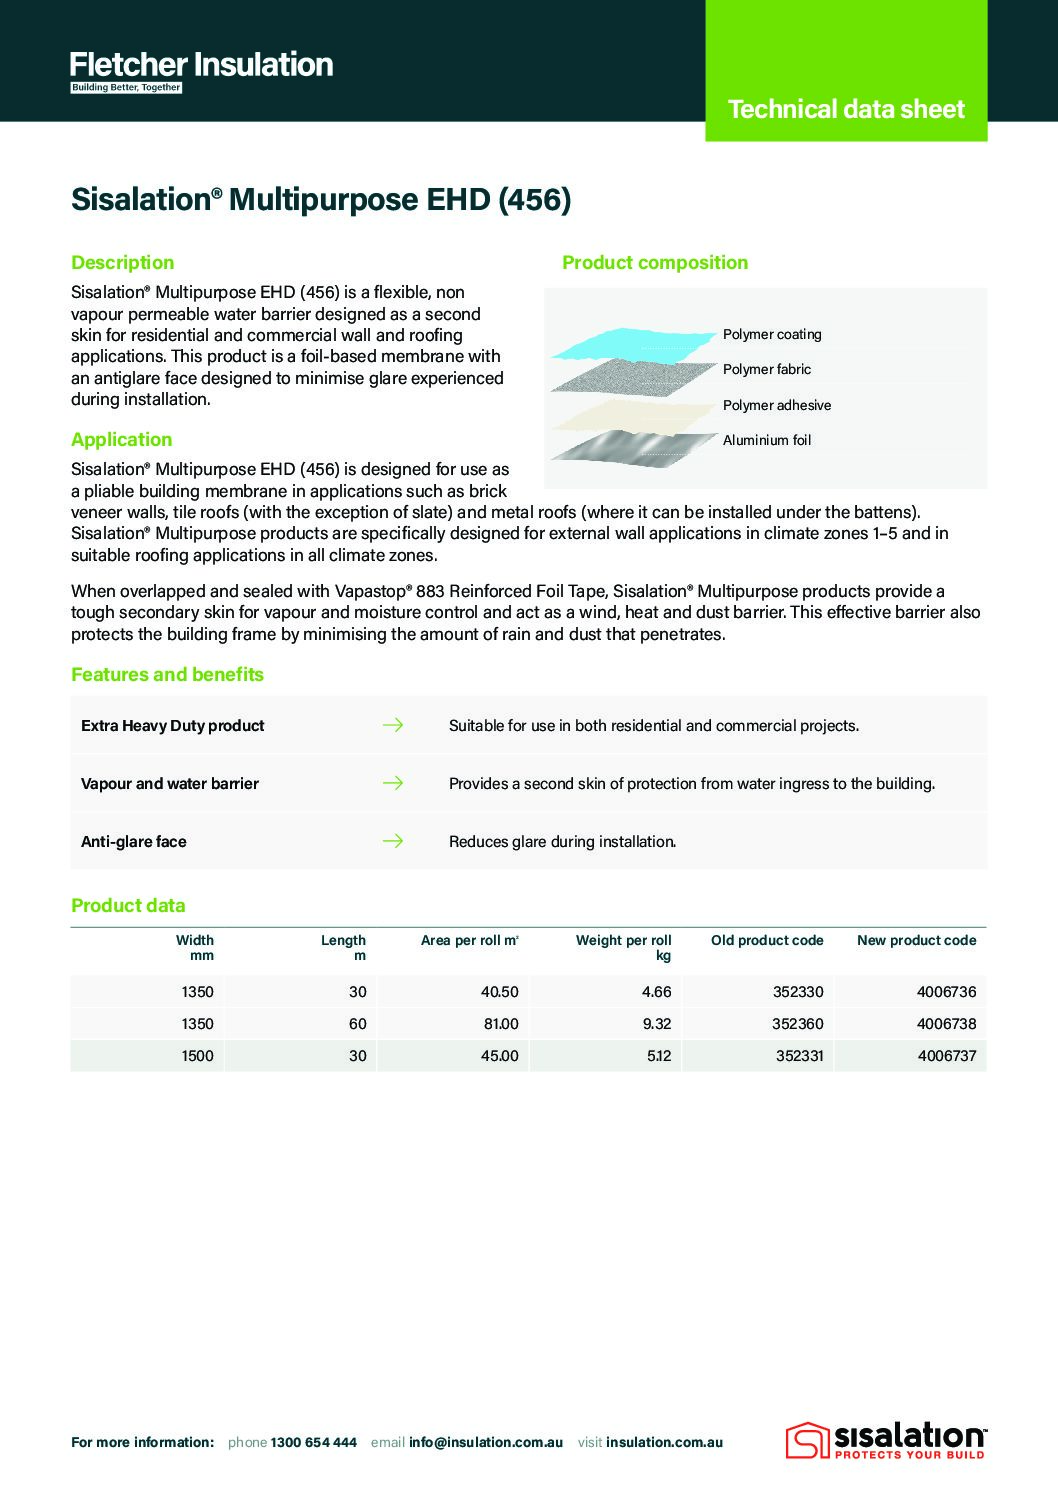 Sisalation® Multipurpose EHD (456) Technical Data Sheet